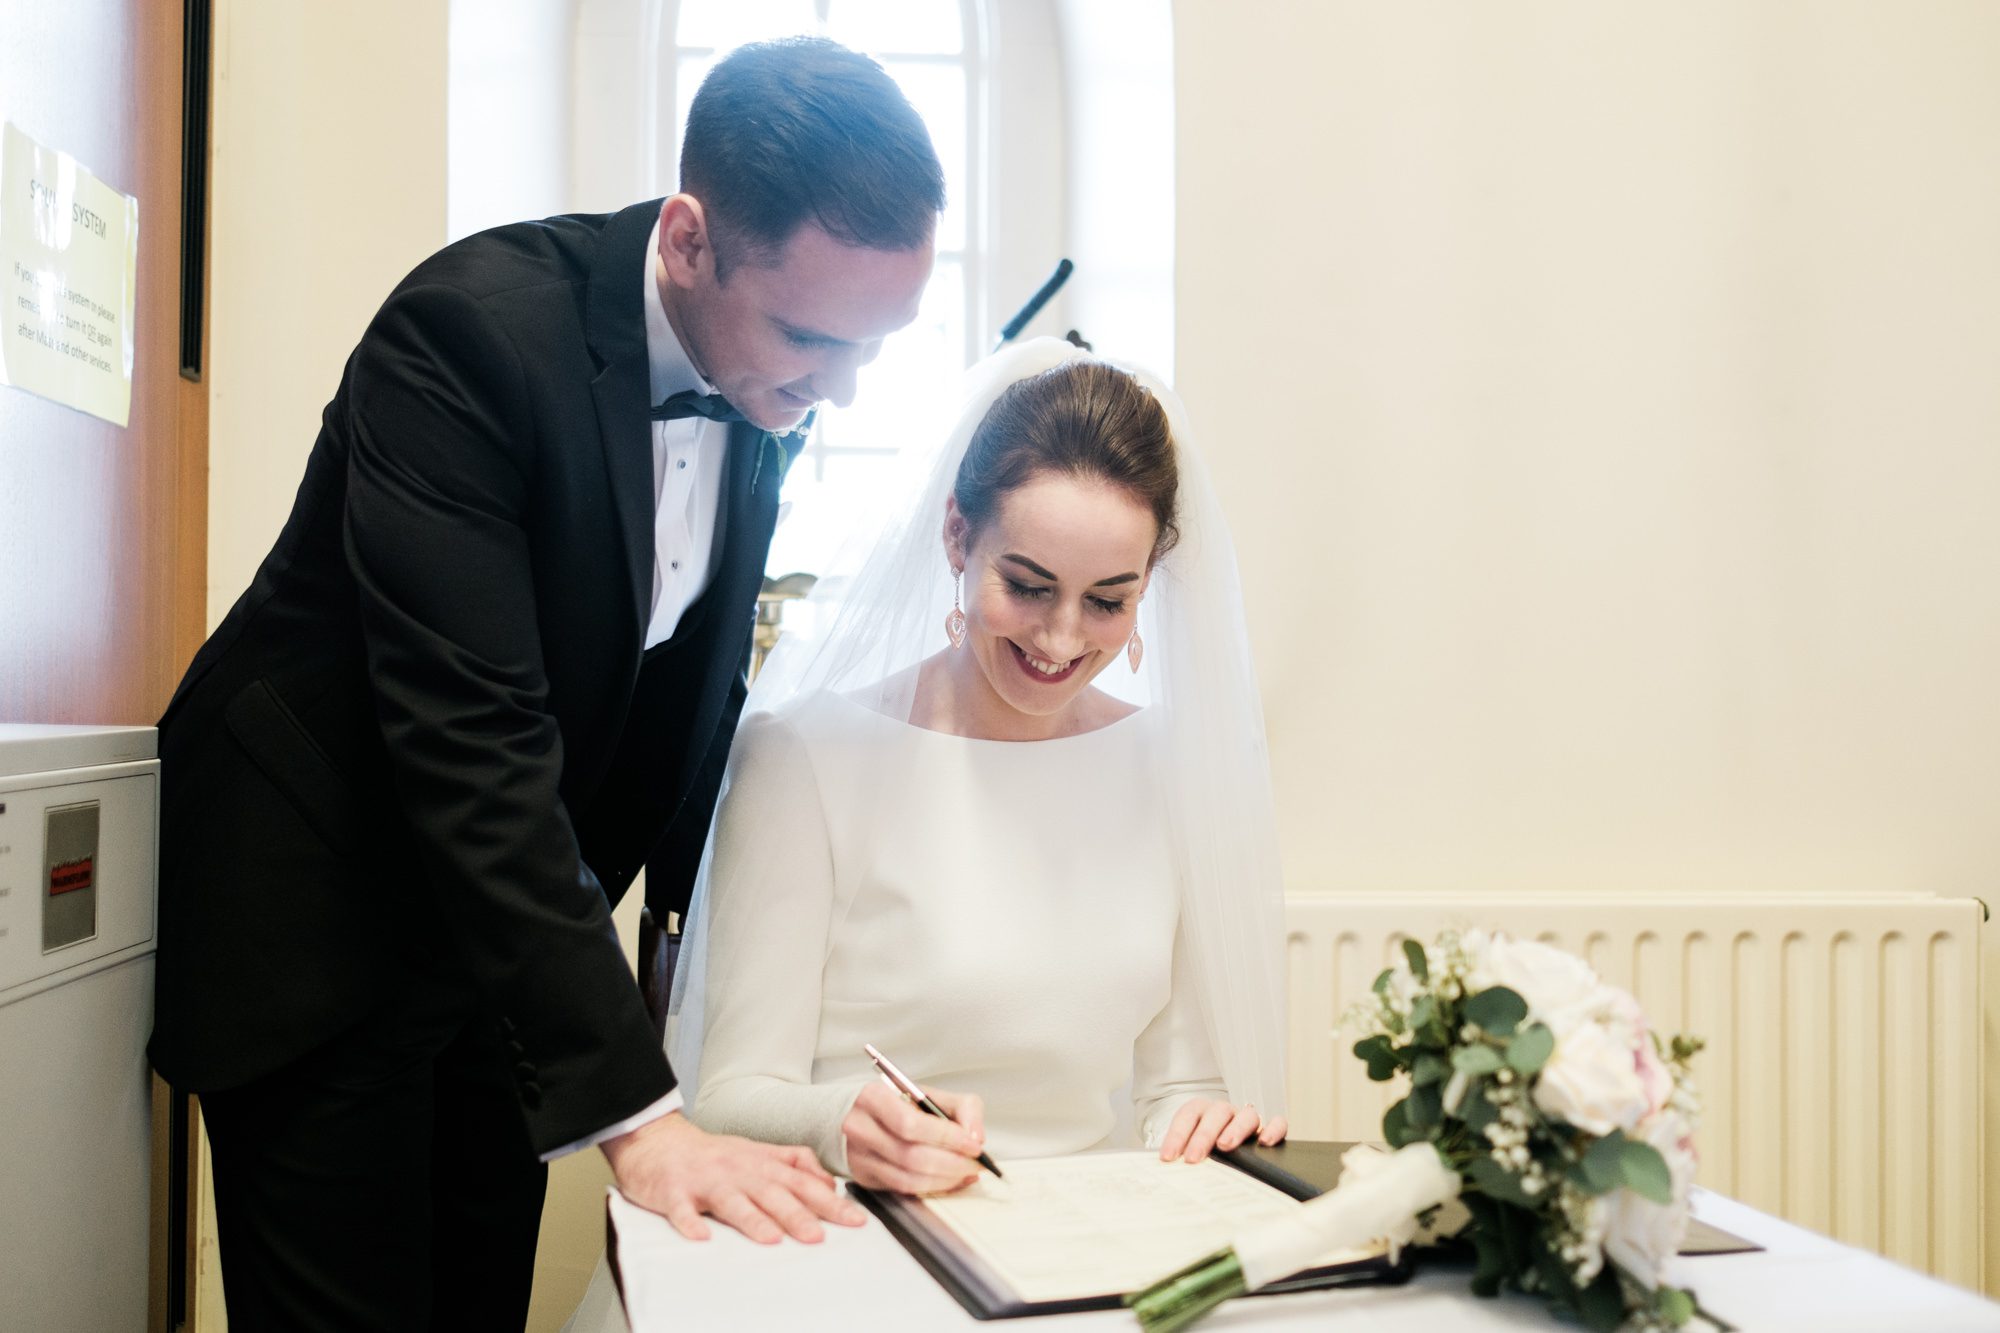 signing the wedding register